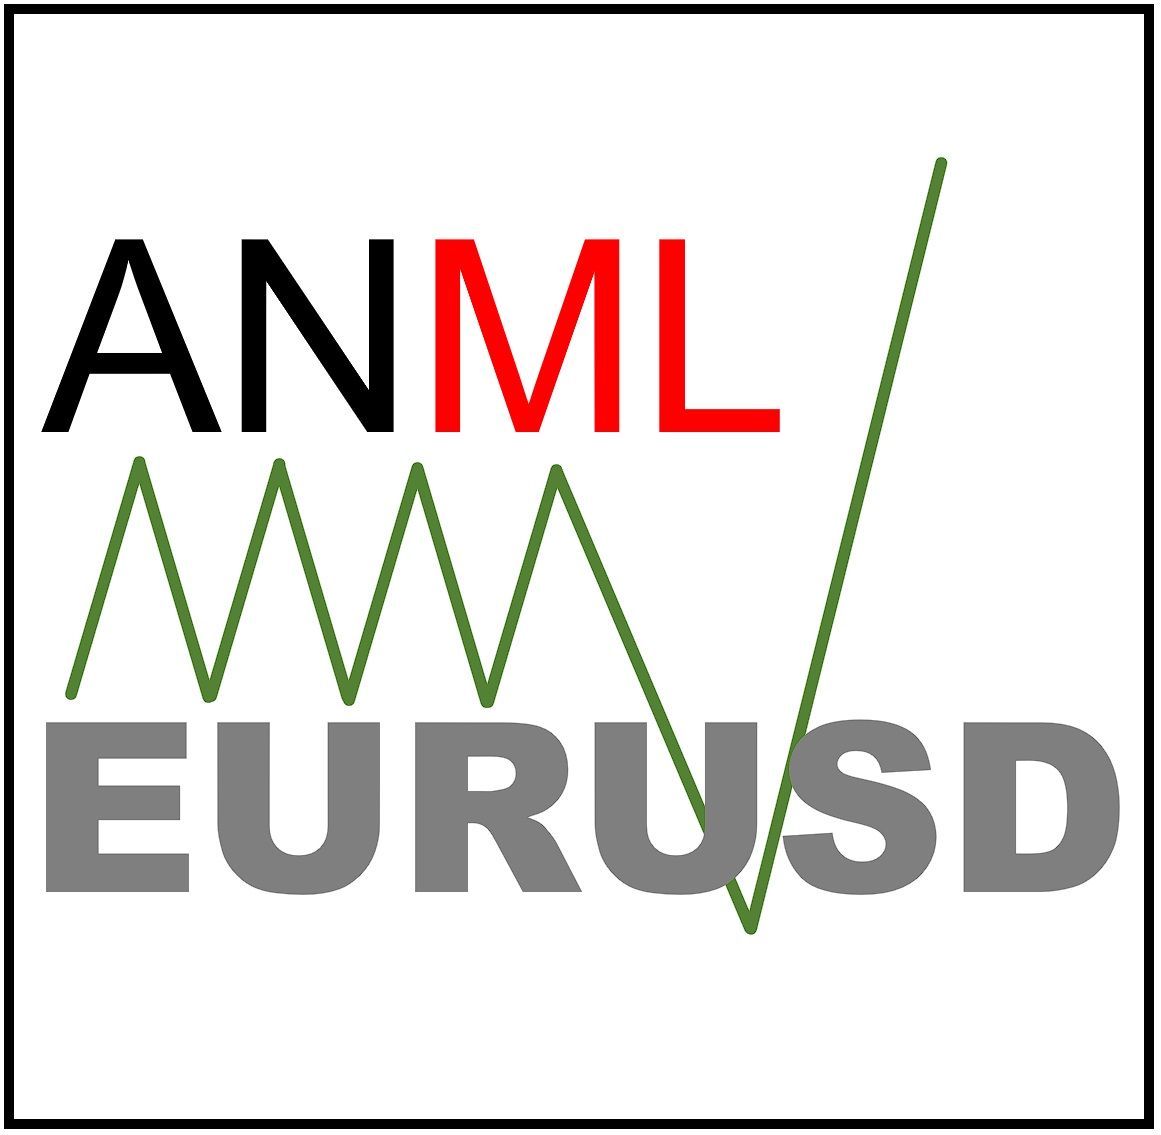 ANML-EURUSD Auto Trading